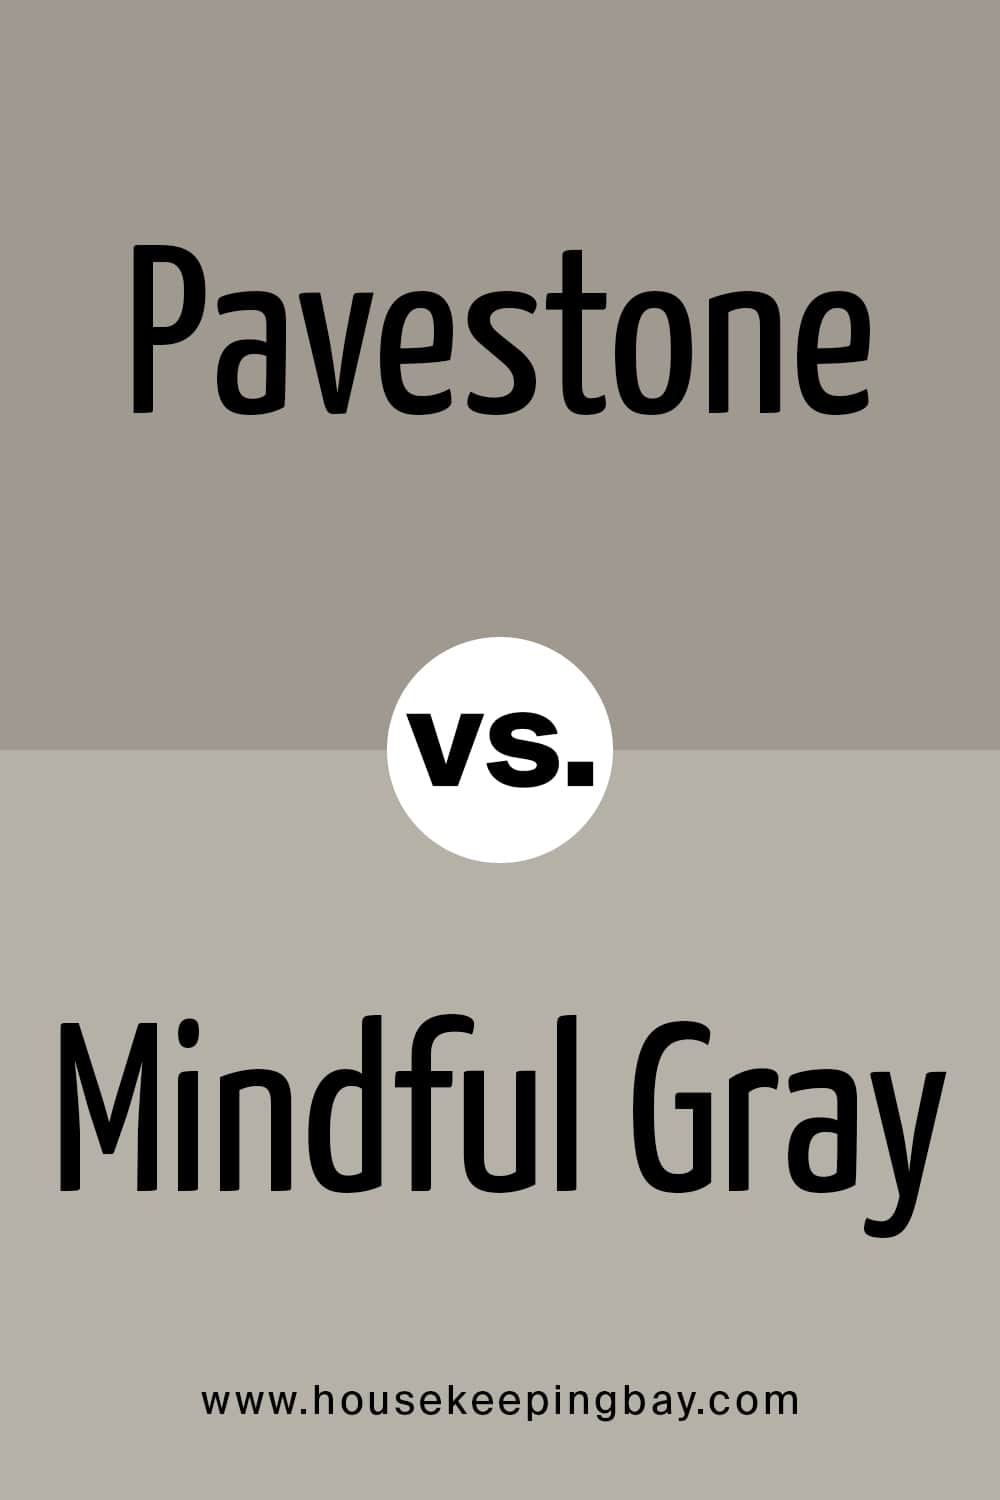 Pavestone VS Mindful Gray